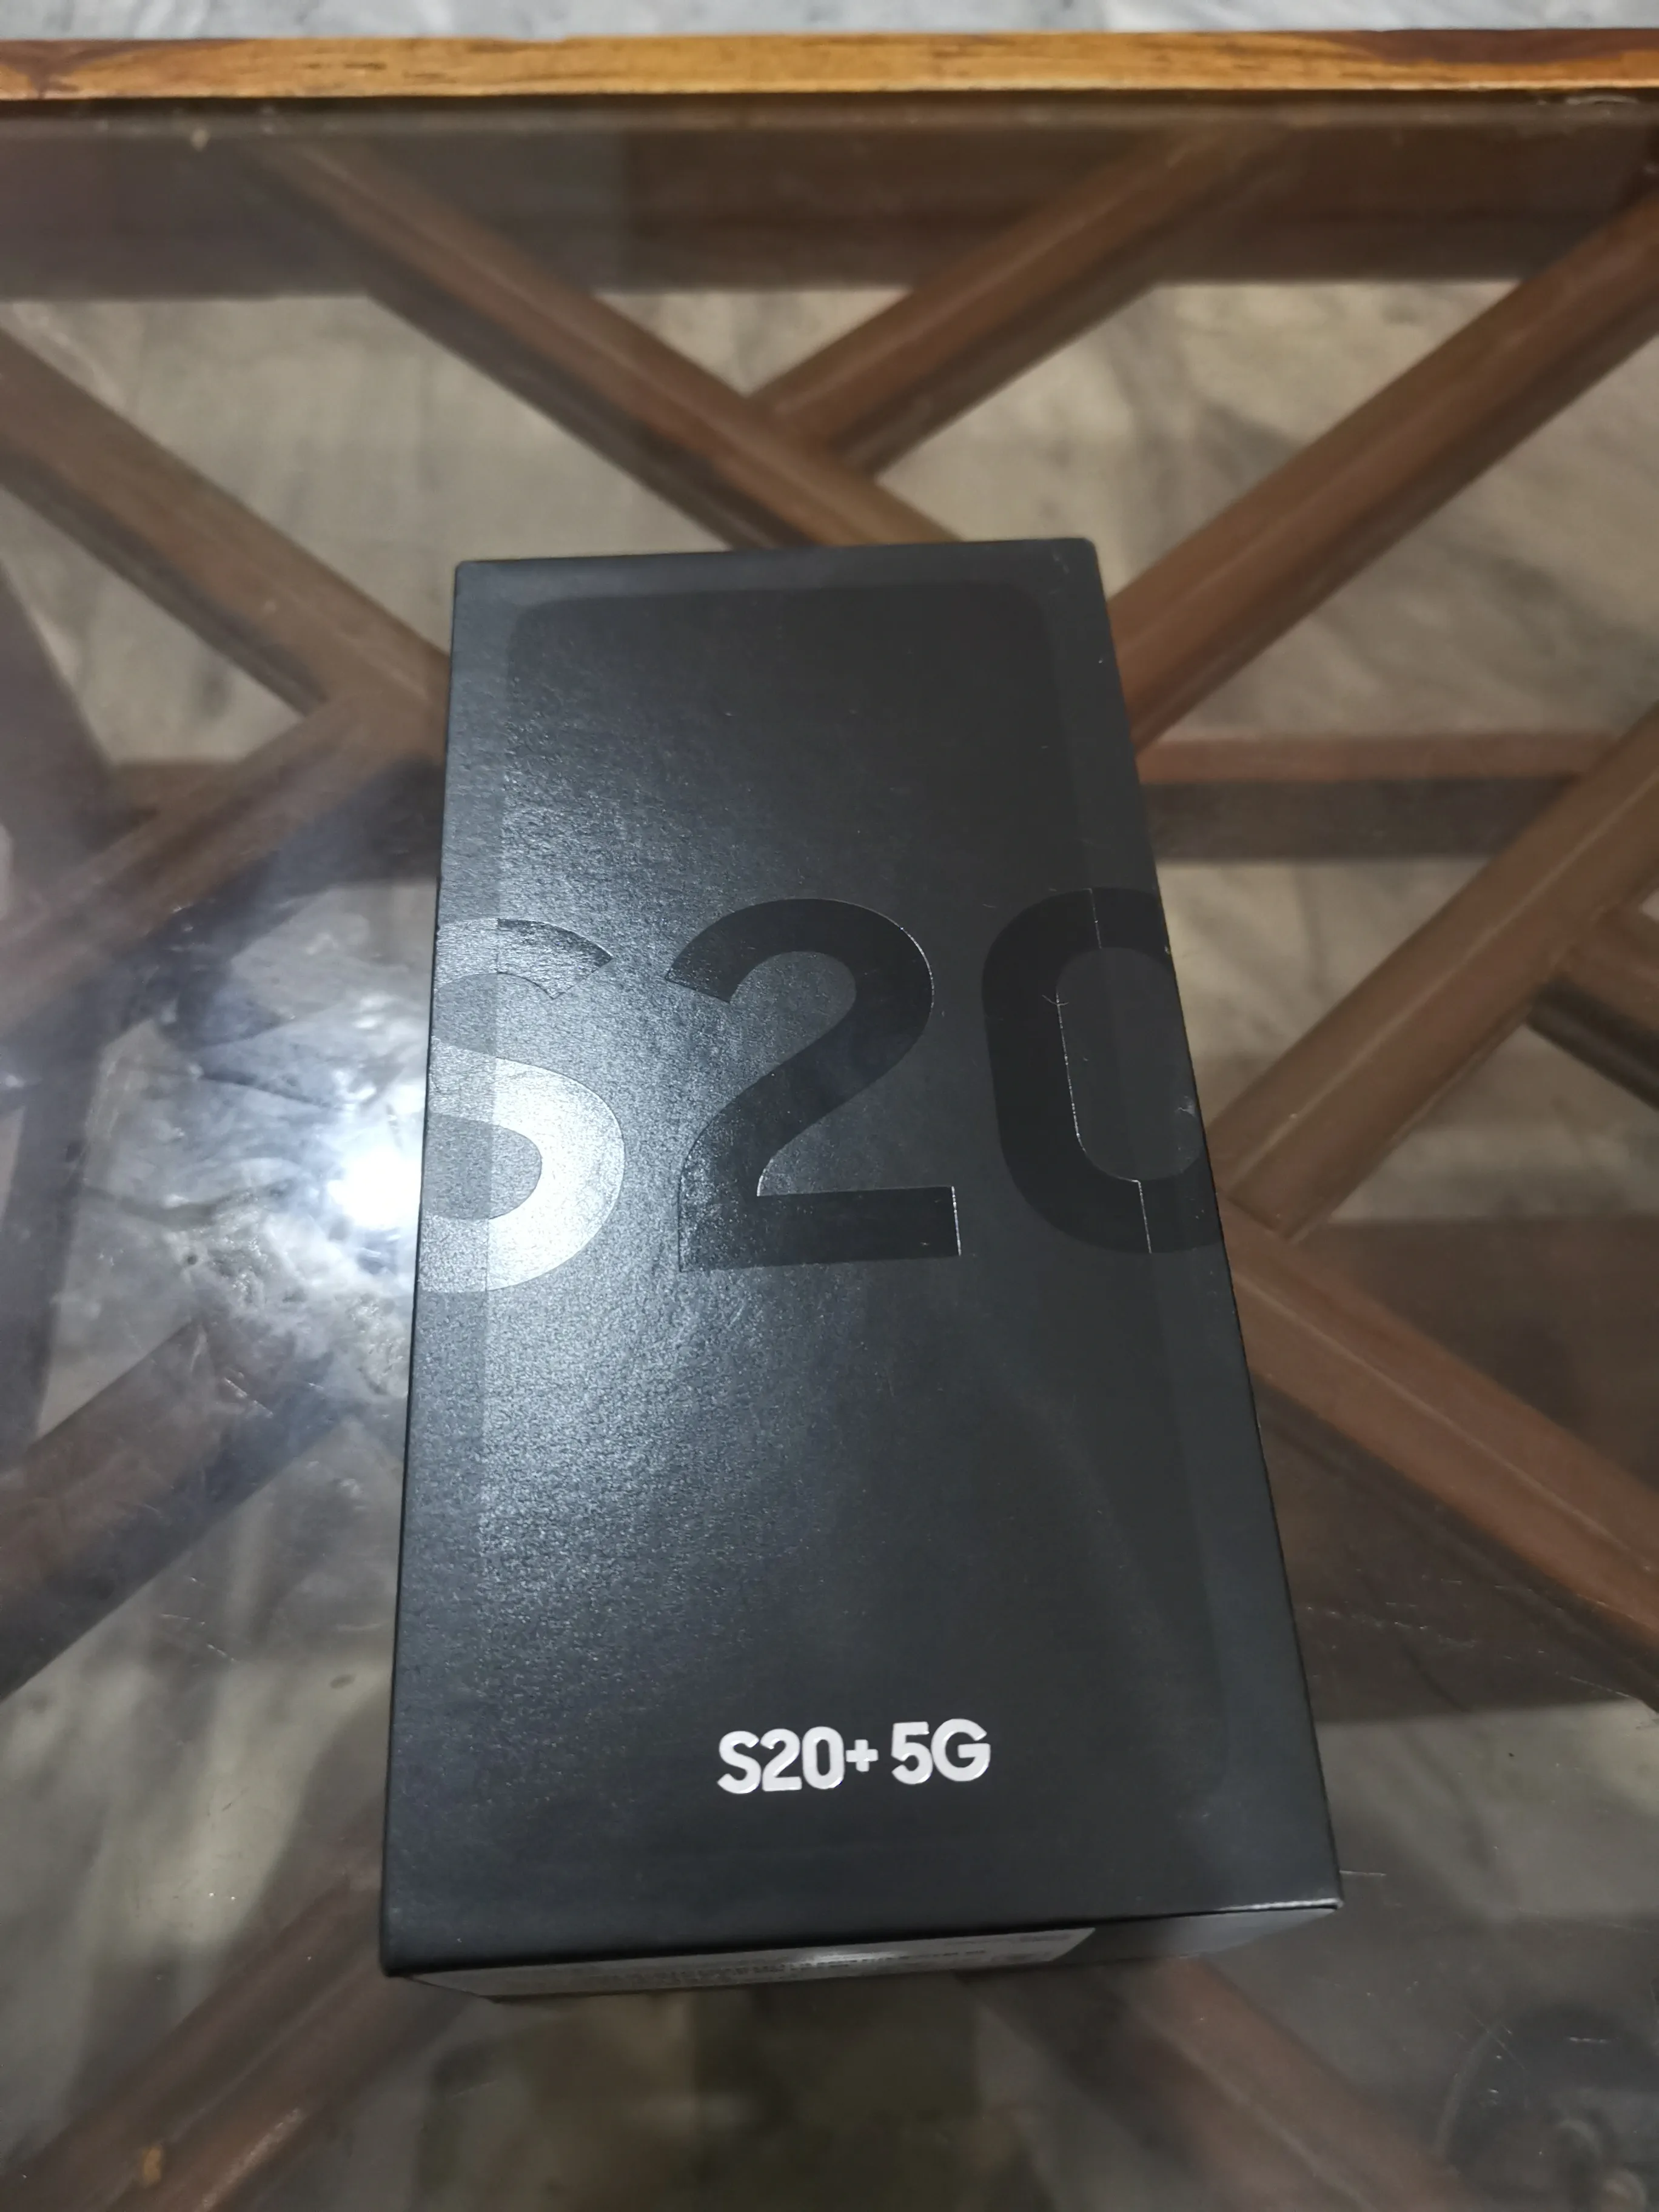 Samsung s20 plus 5G - photo 1